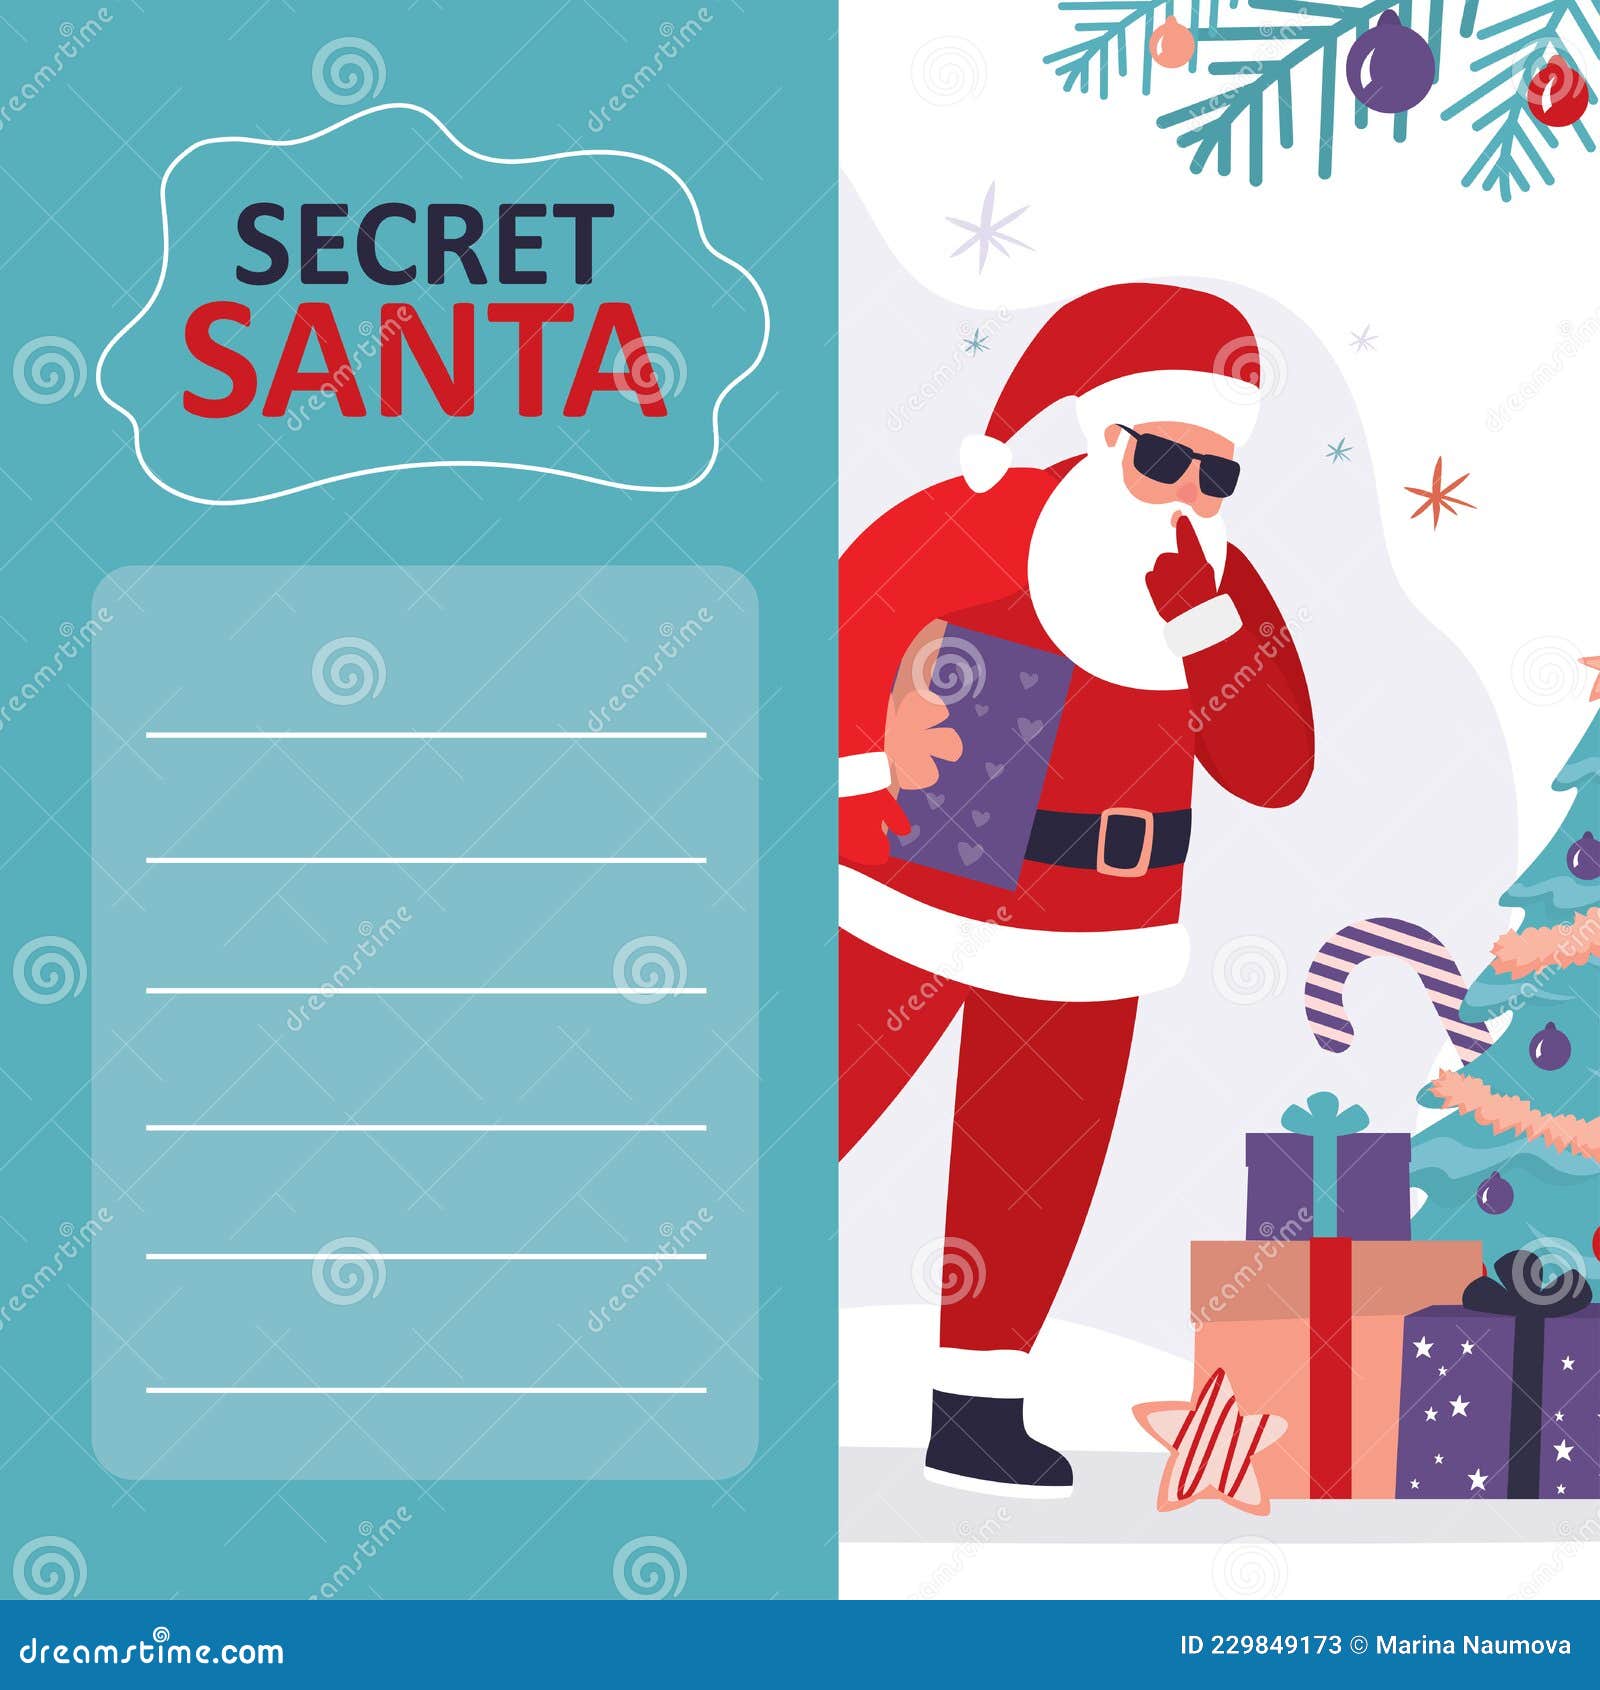 Secret Santa Printable Banner. Christmas Greeting Card with Santa Claus  Stock Vector - Illustration of celebration, business: 229849173